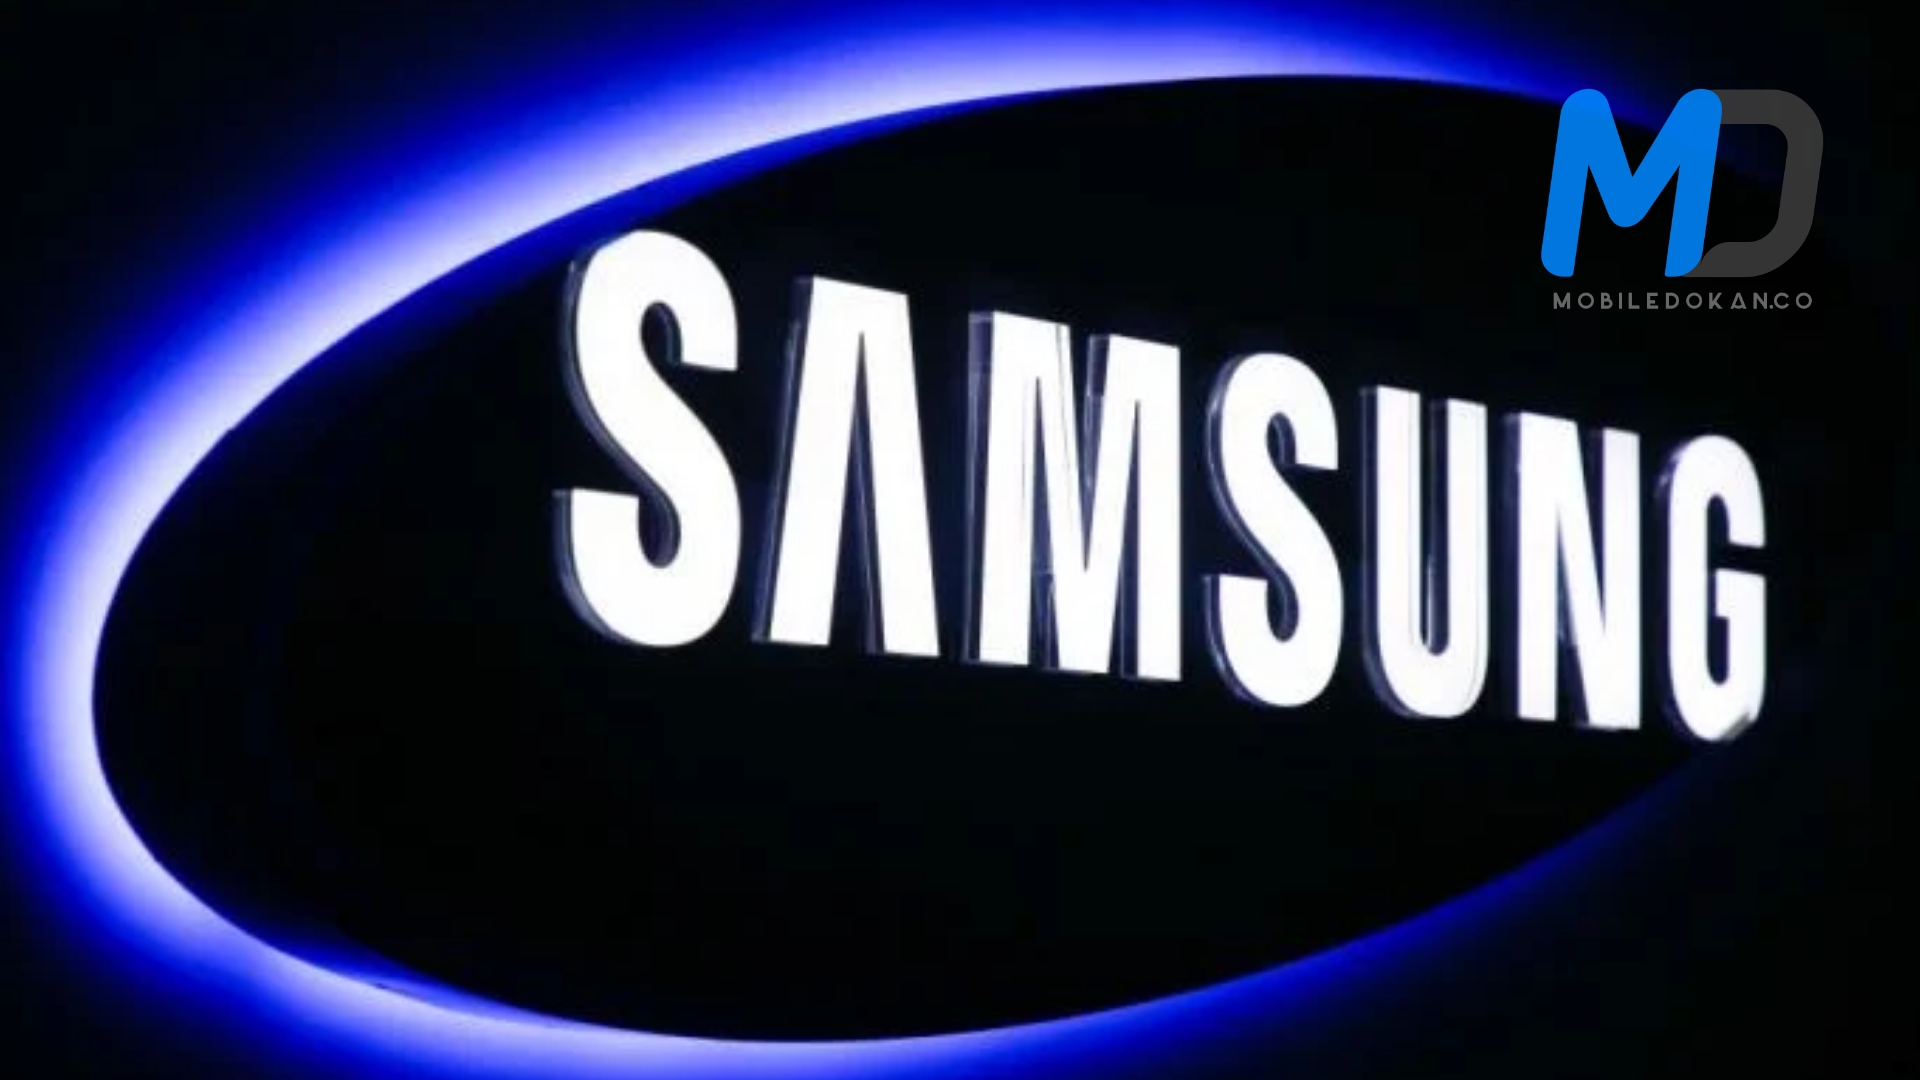 Samsung announces $205 billion investment plan